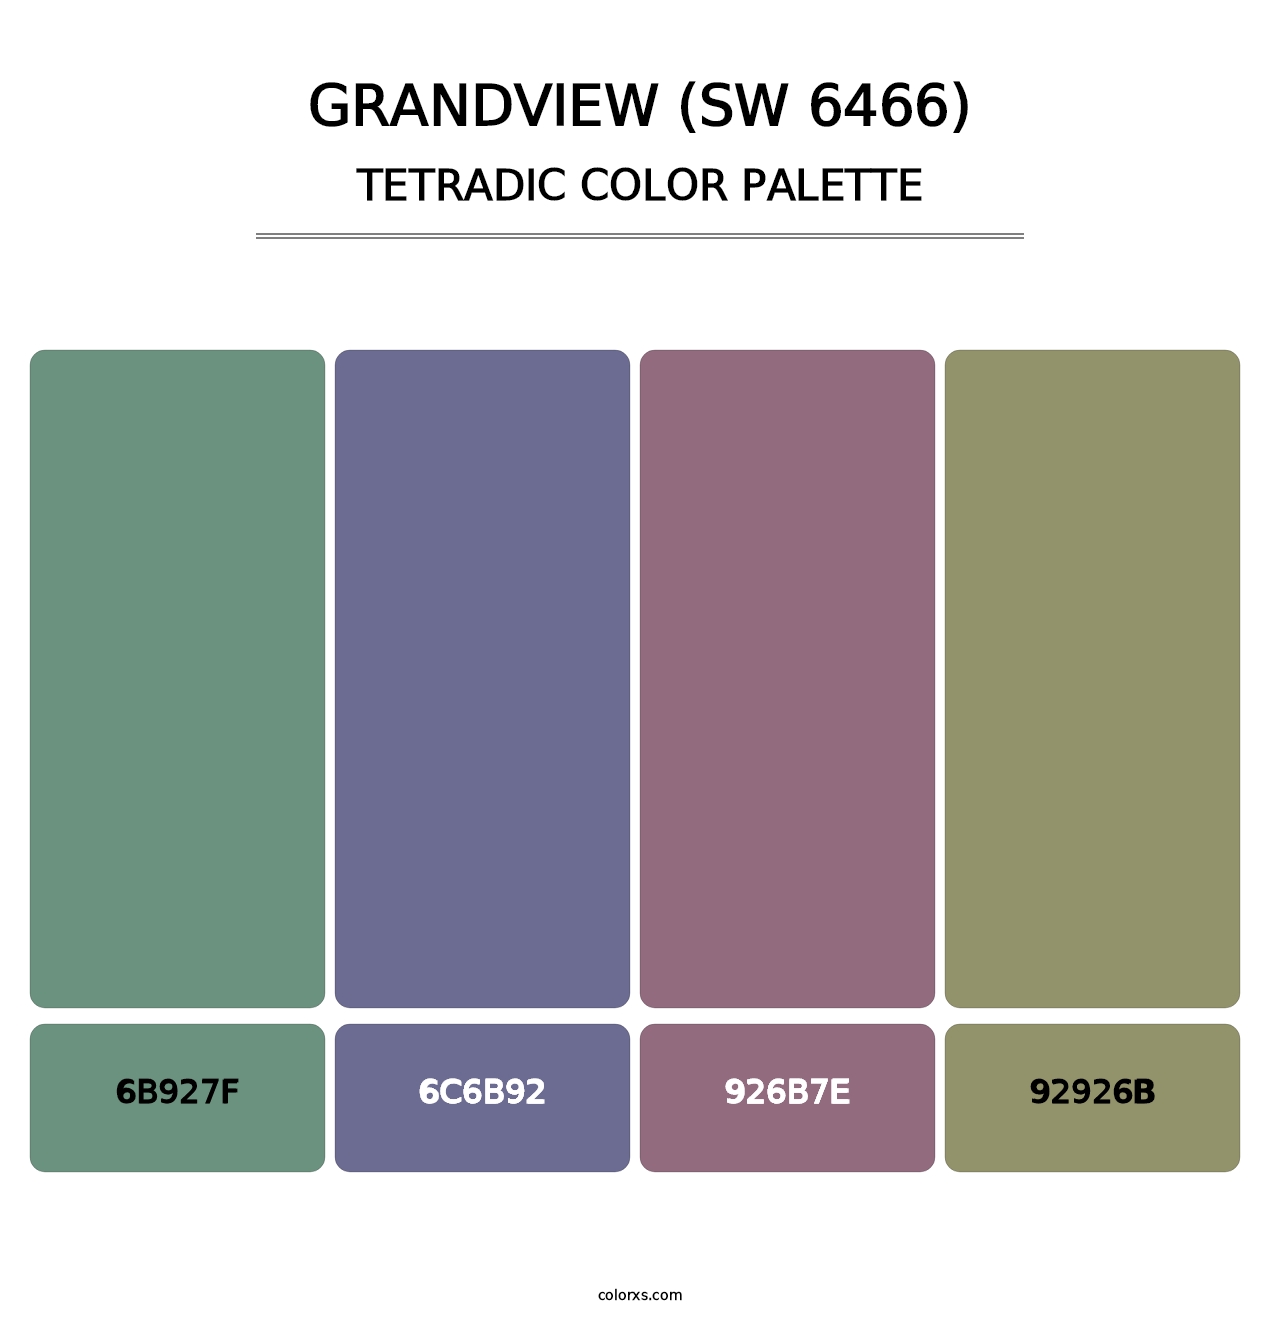 Grandview (SW 6466) - Tetradic Color Palette